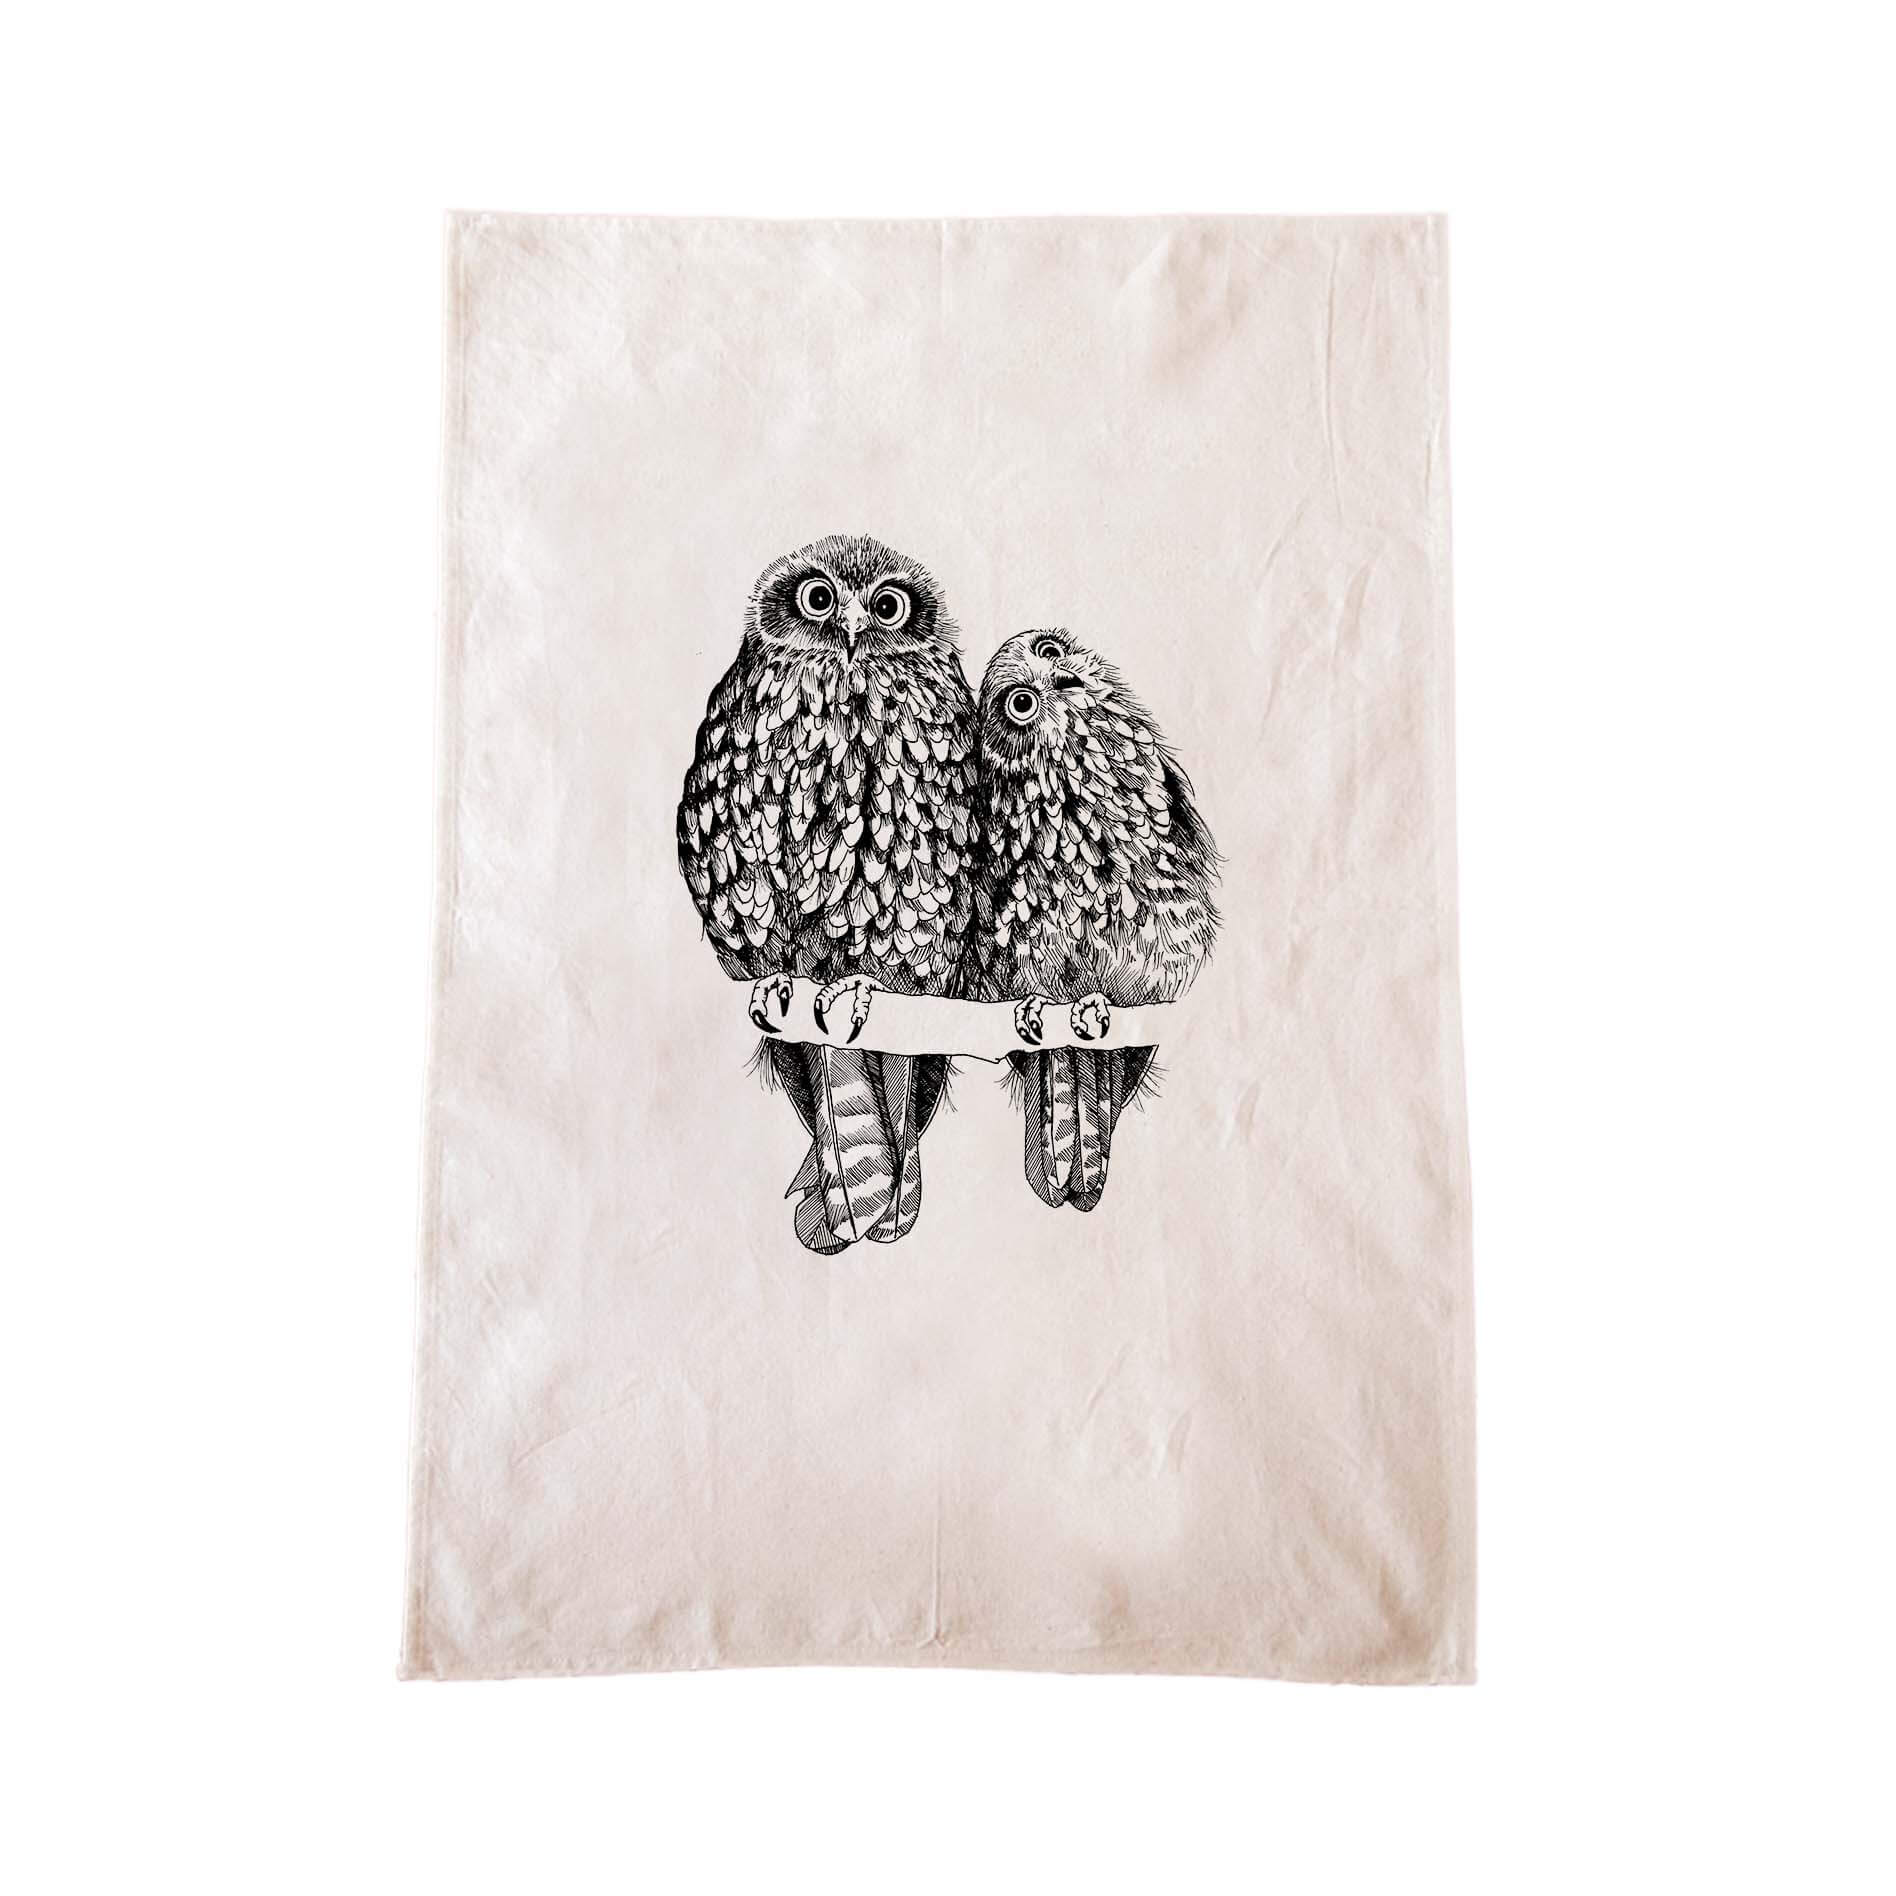 Off-white cotton tea towel with a screen printed Morepork/Ruru design.